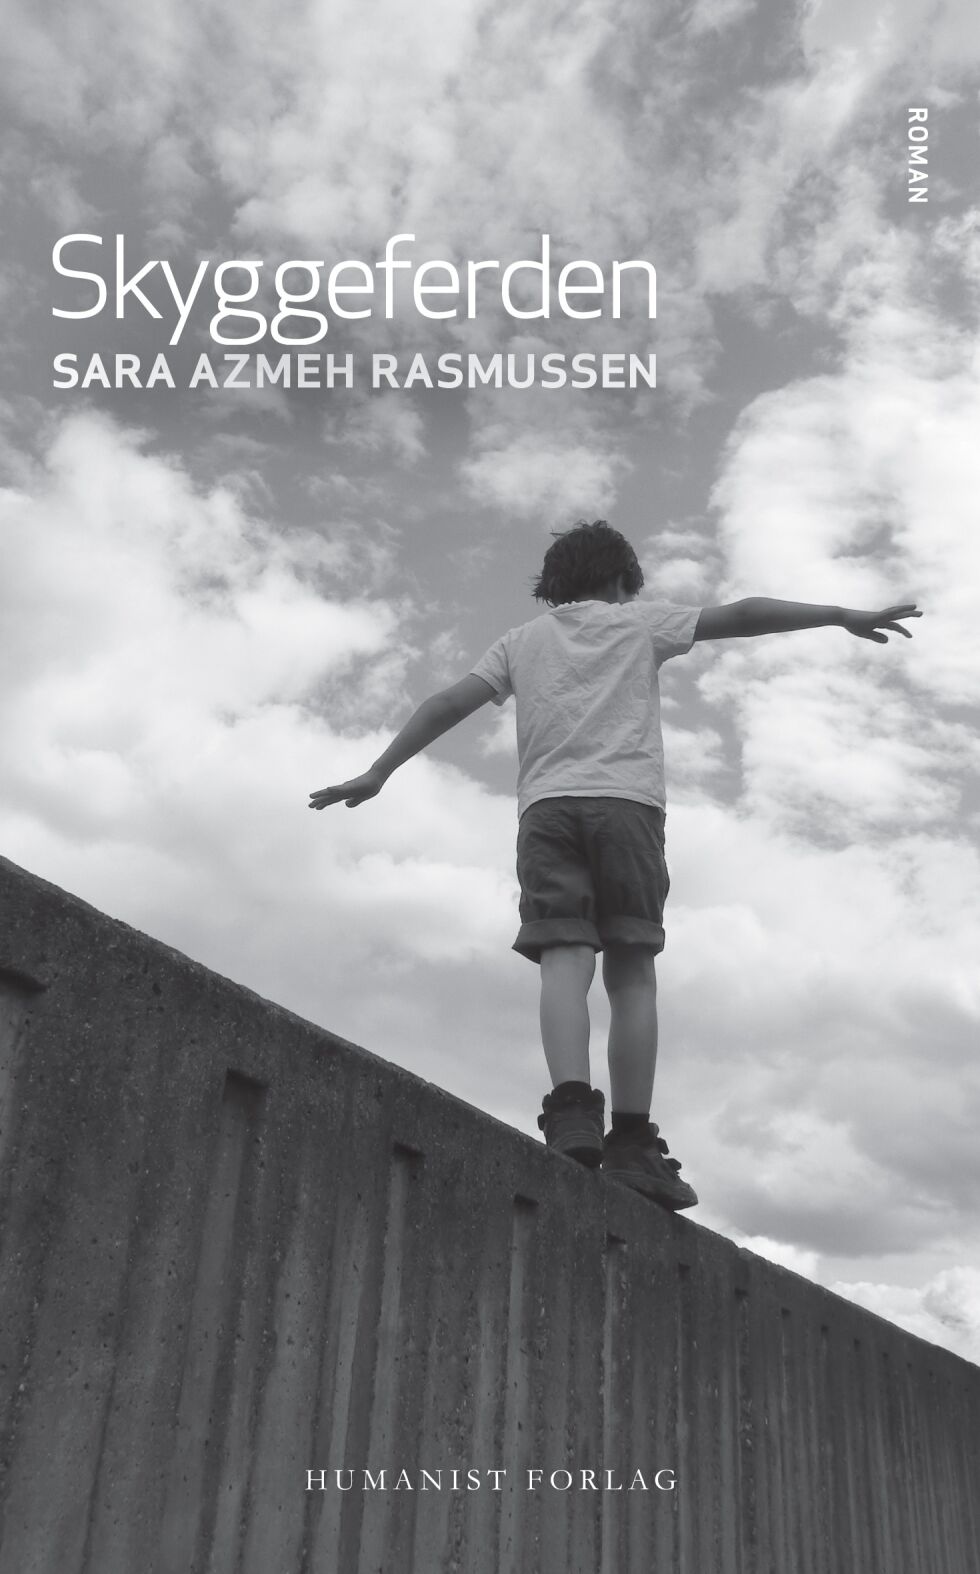 Skyggeferden lanseres på Litteraturhuset i dag, der Sara Azmeh Rasmussen samtaler om boka med historiker Hilde Sandvik.